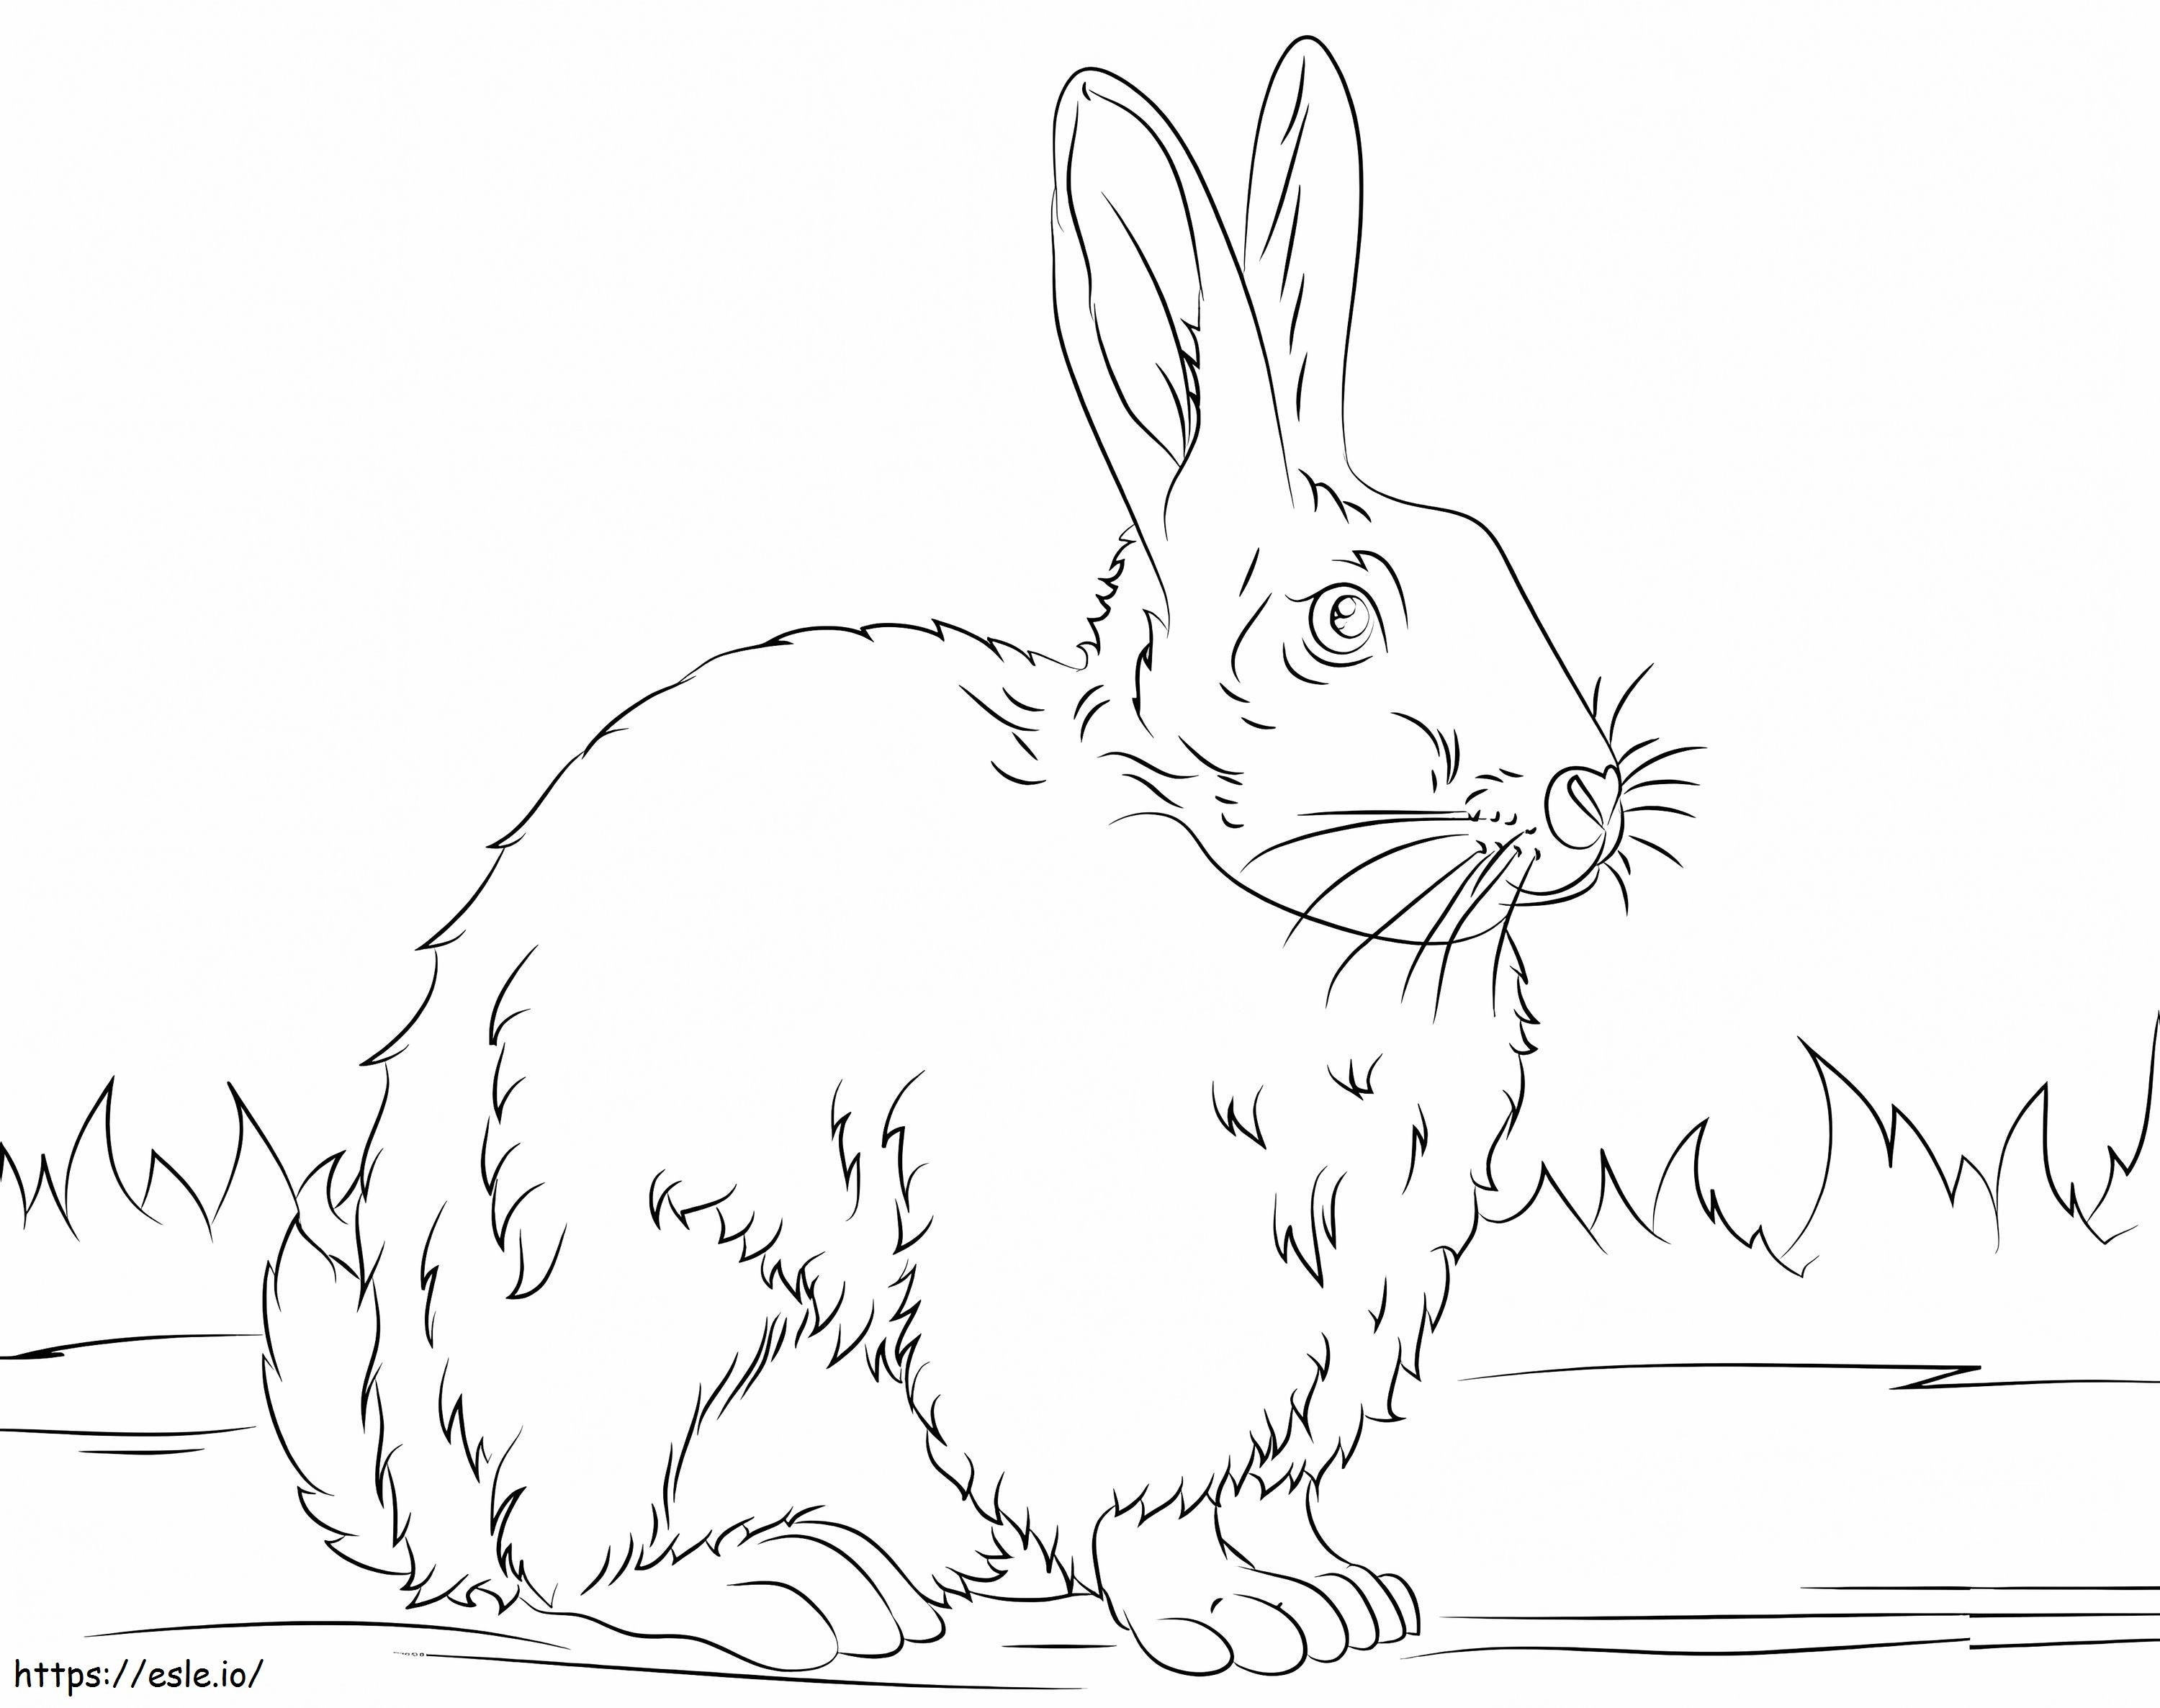 Cute Bunny 3 coloring page